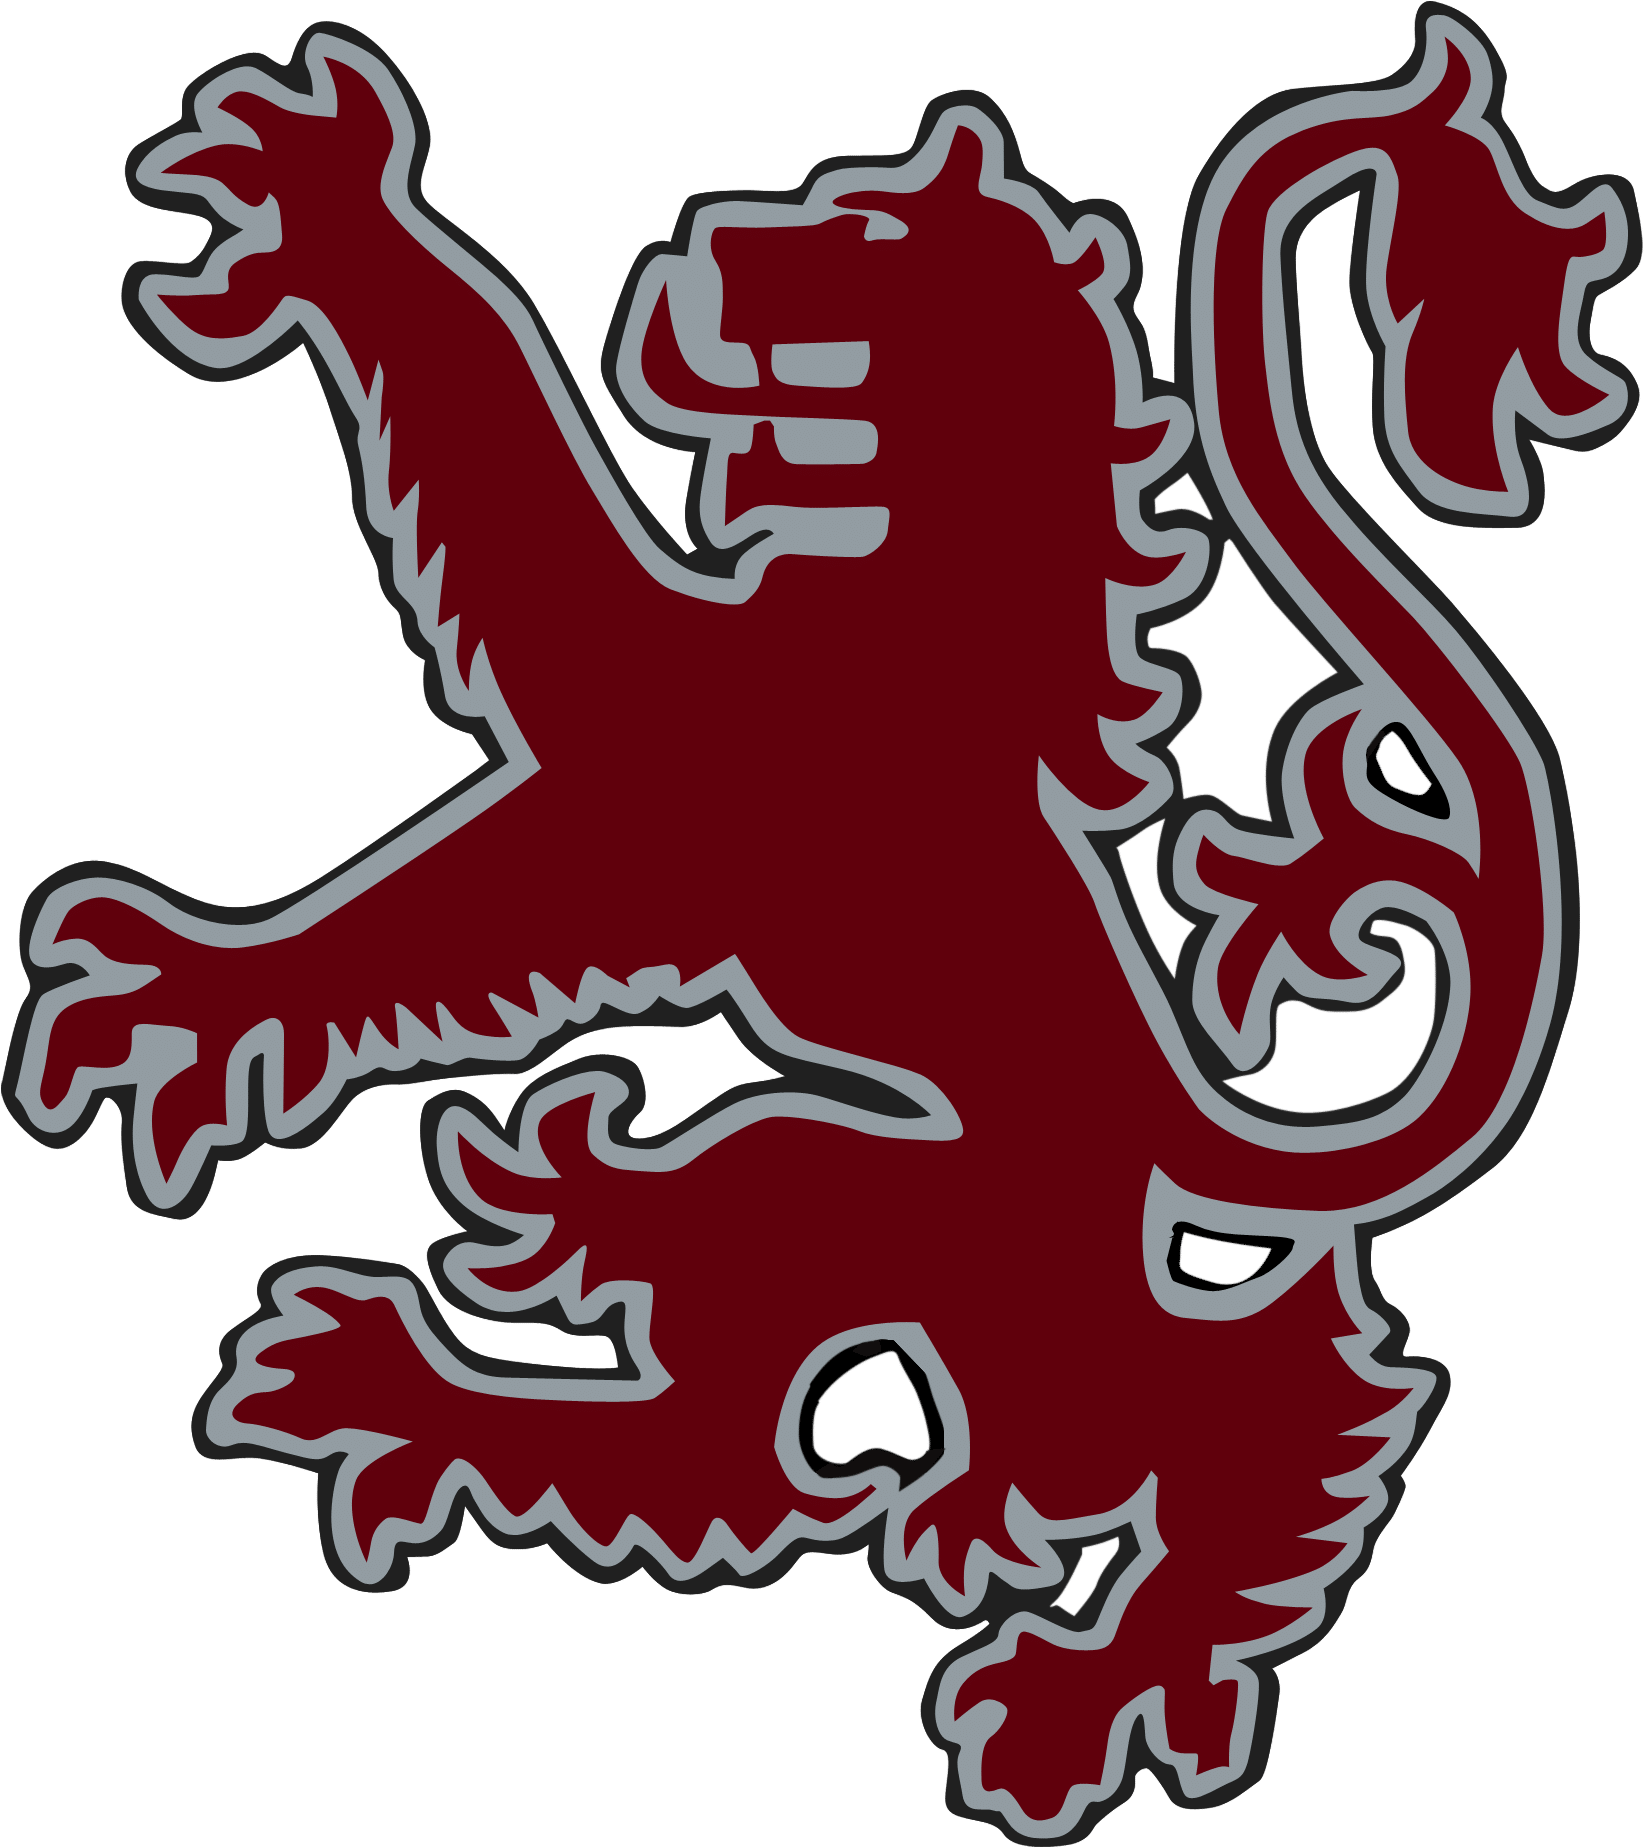 London Knights - Royal Banner Of Scotland (2000x2000)